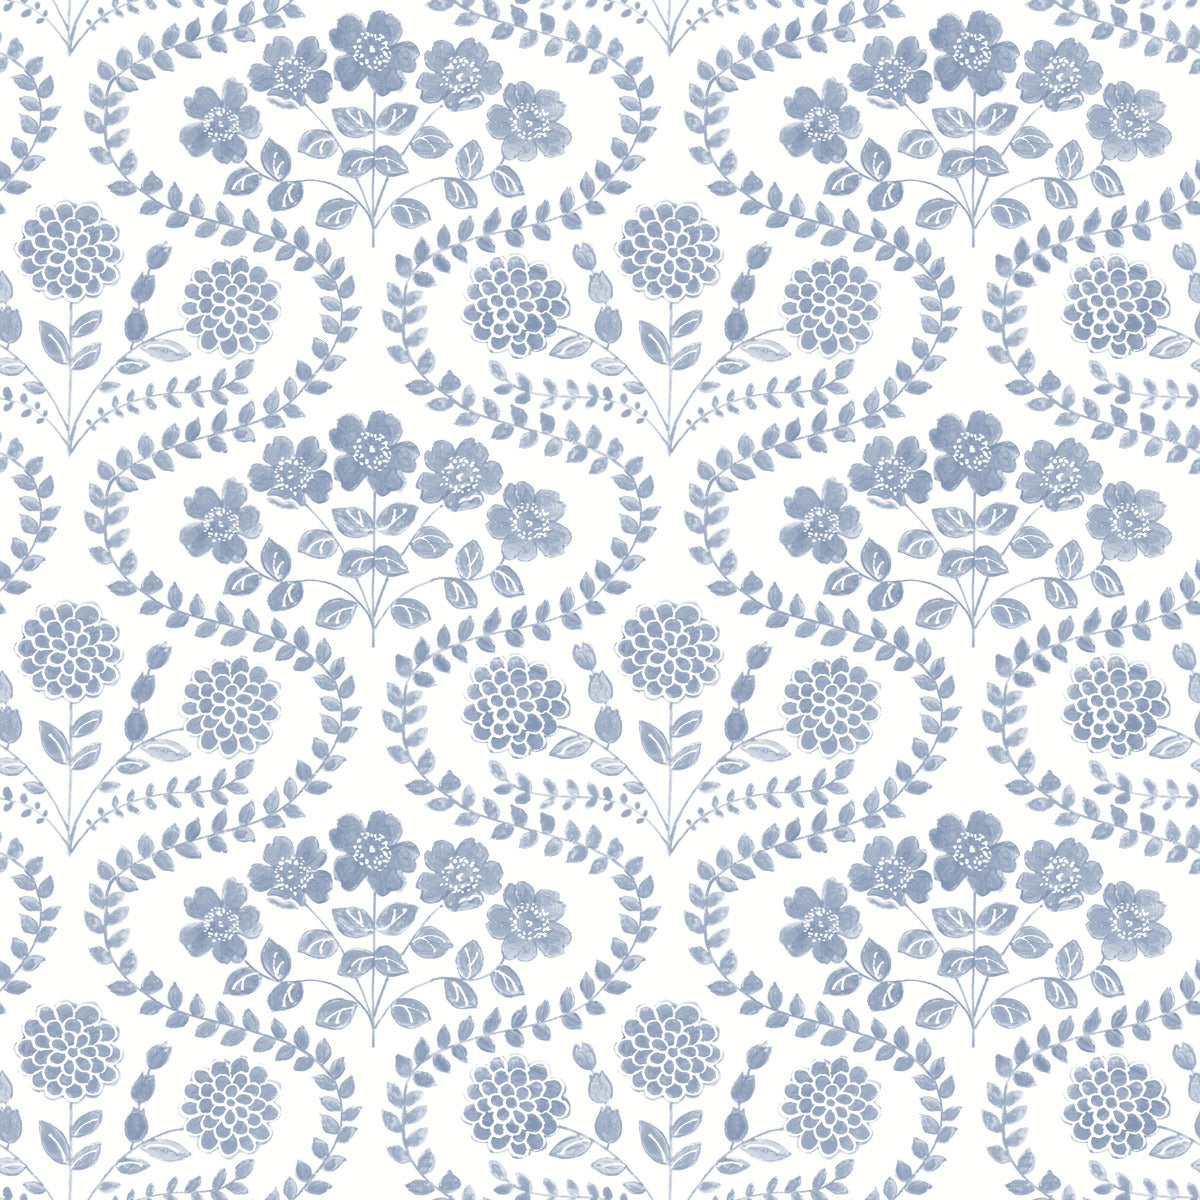 Simply Farmhouse Folksy Floral Wallpaper - Blue & White